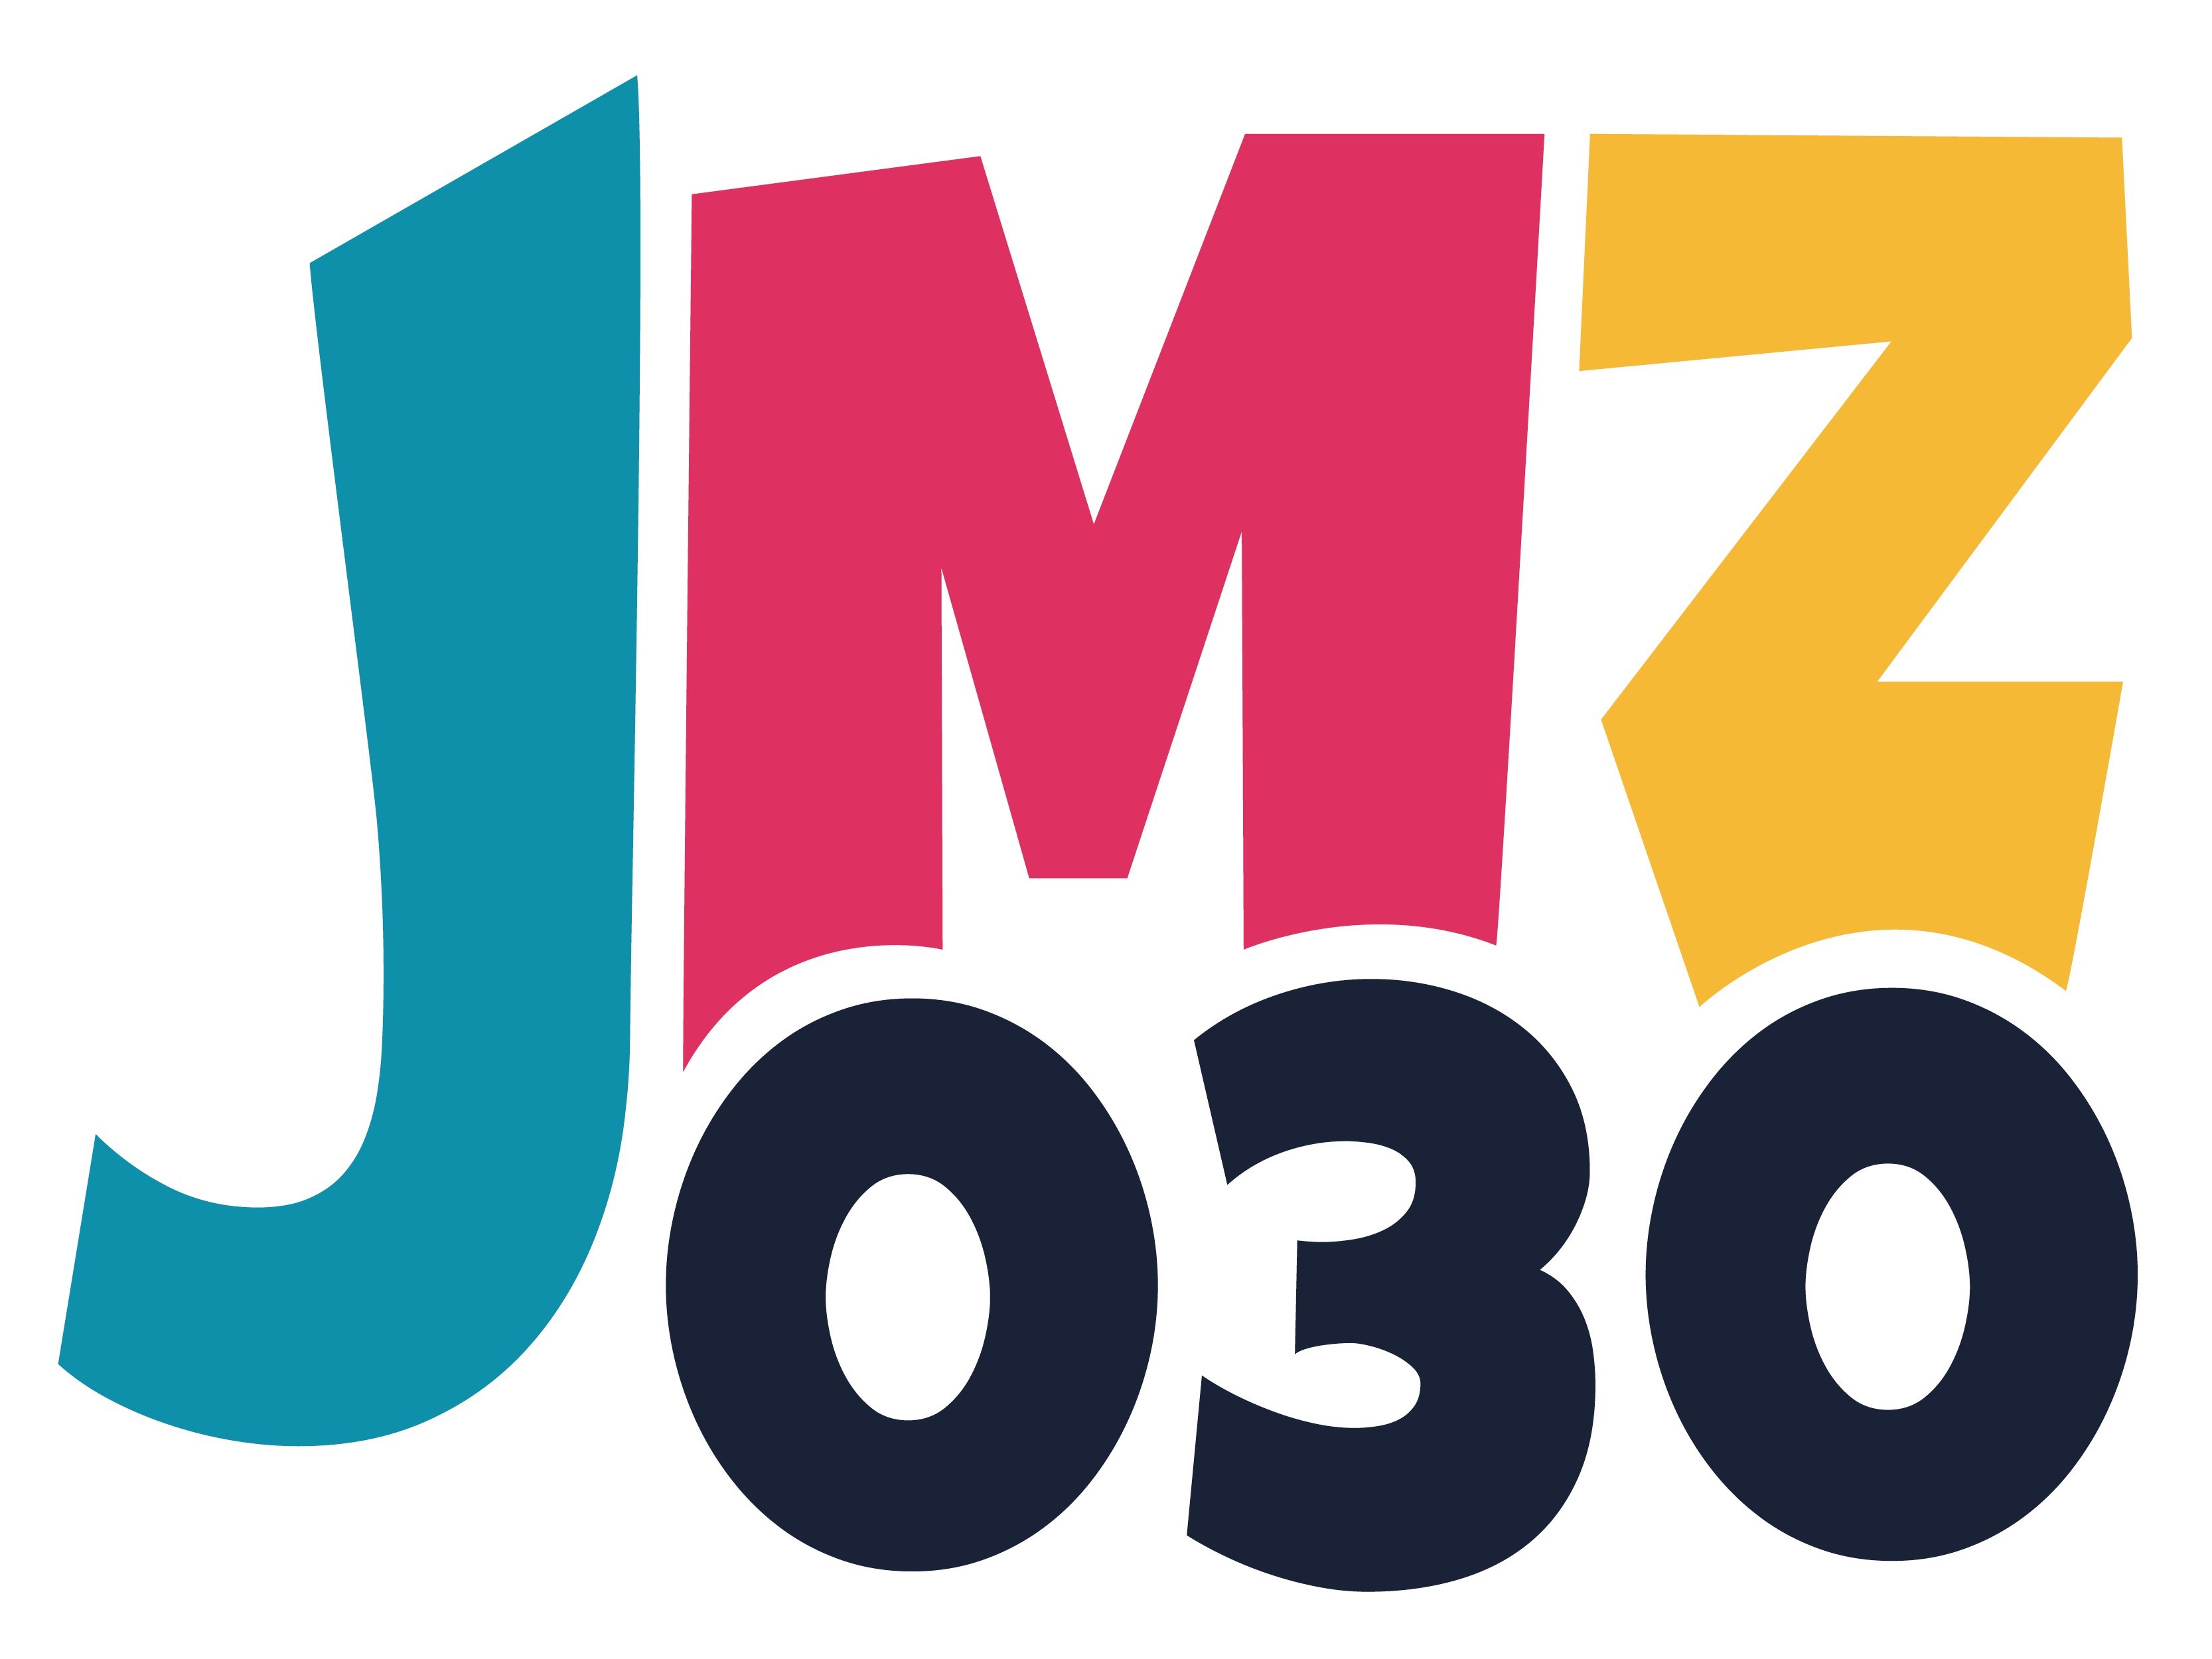 Logo Jmz030